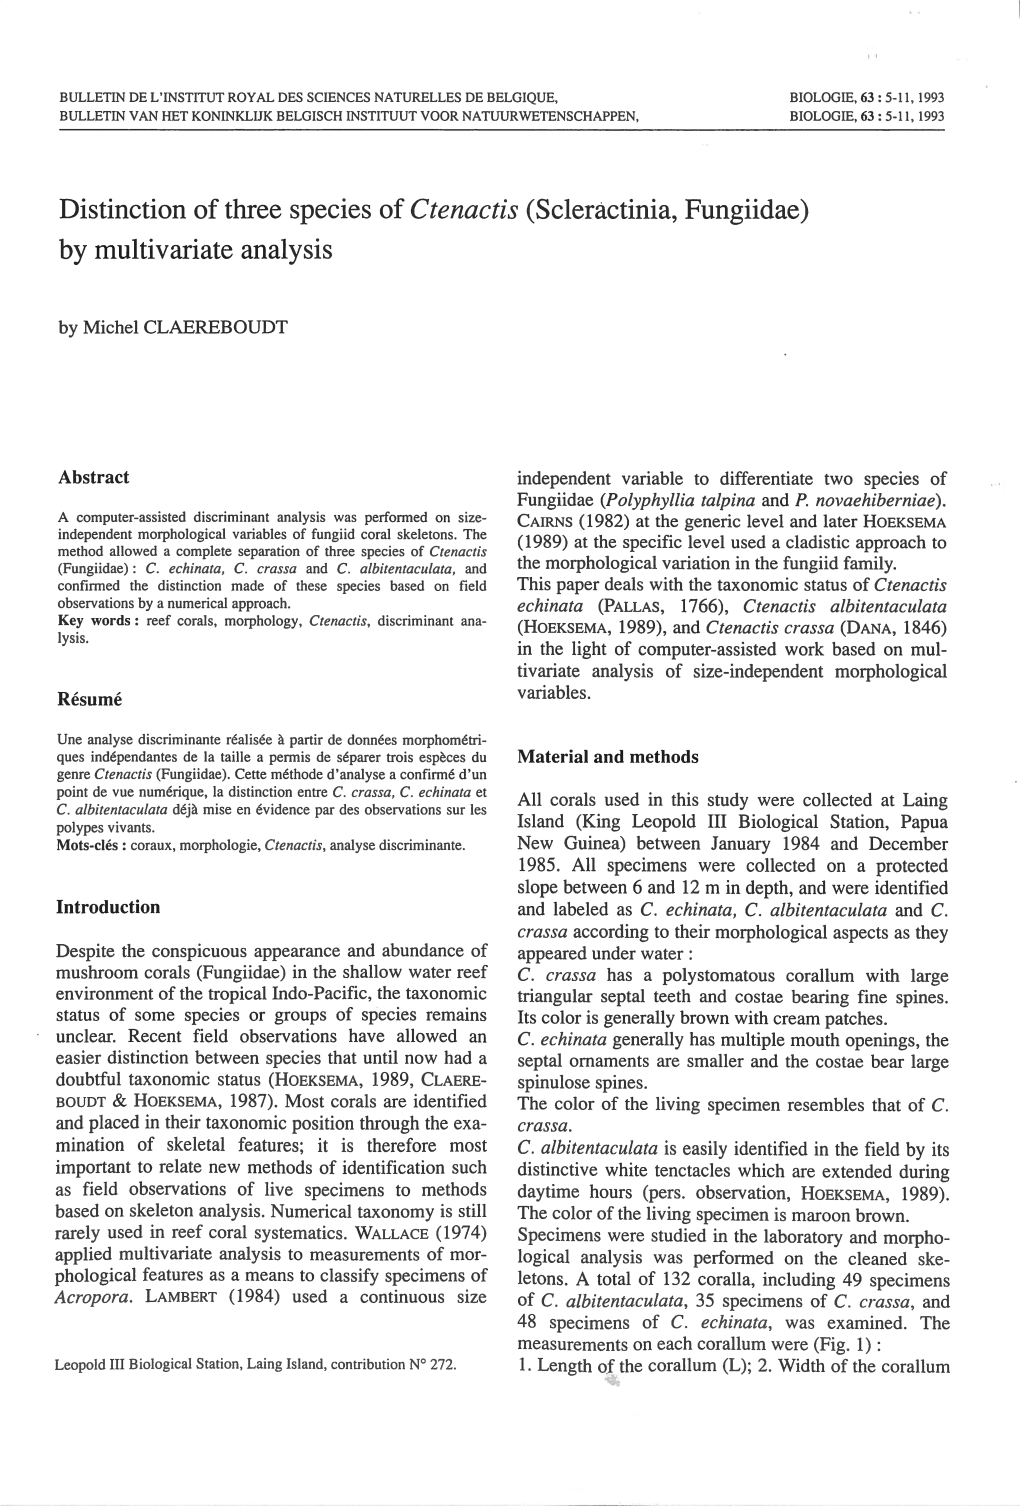 Distinction of Three Species of Ctenactis (Scleractinia, Fungiidae) by Multivariate Analysis